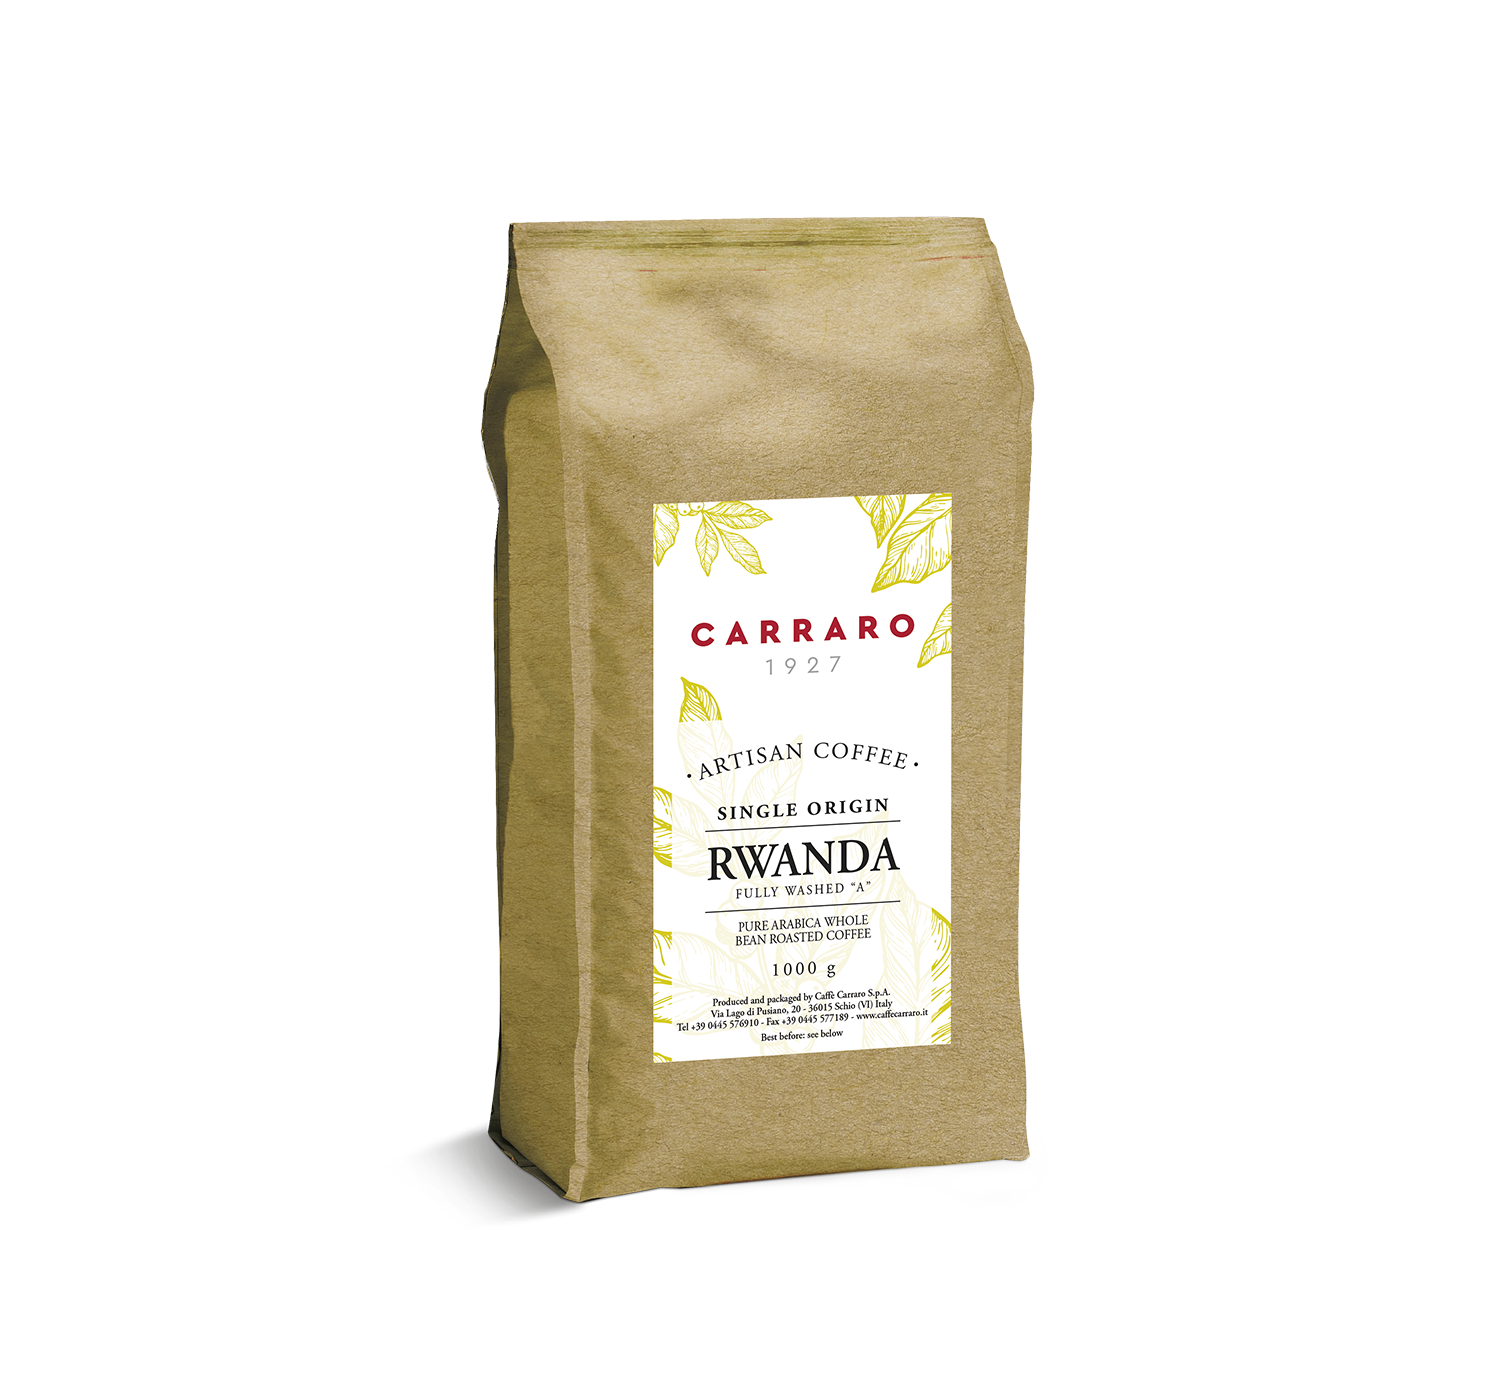 Artisan Coffee - Rwanda – coffee beans 1000 g - Shop online Caffè Carraro